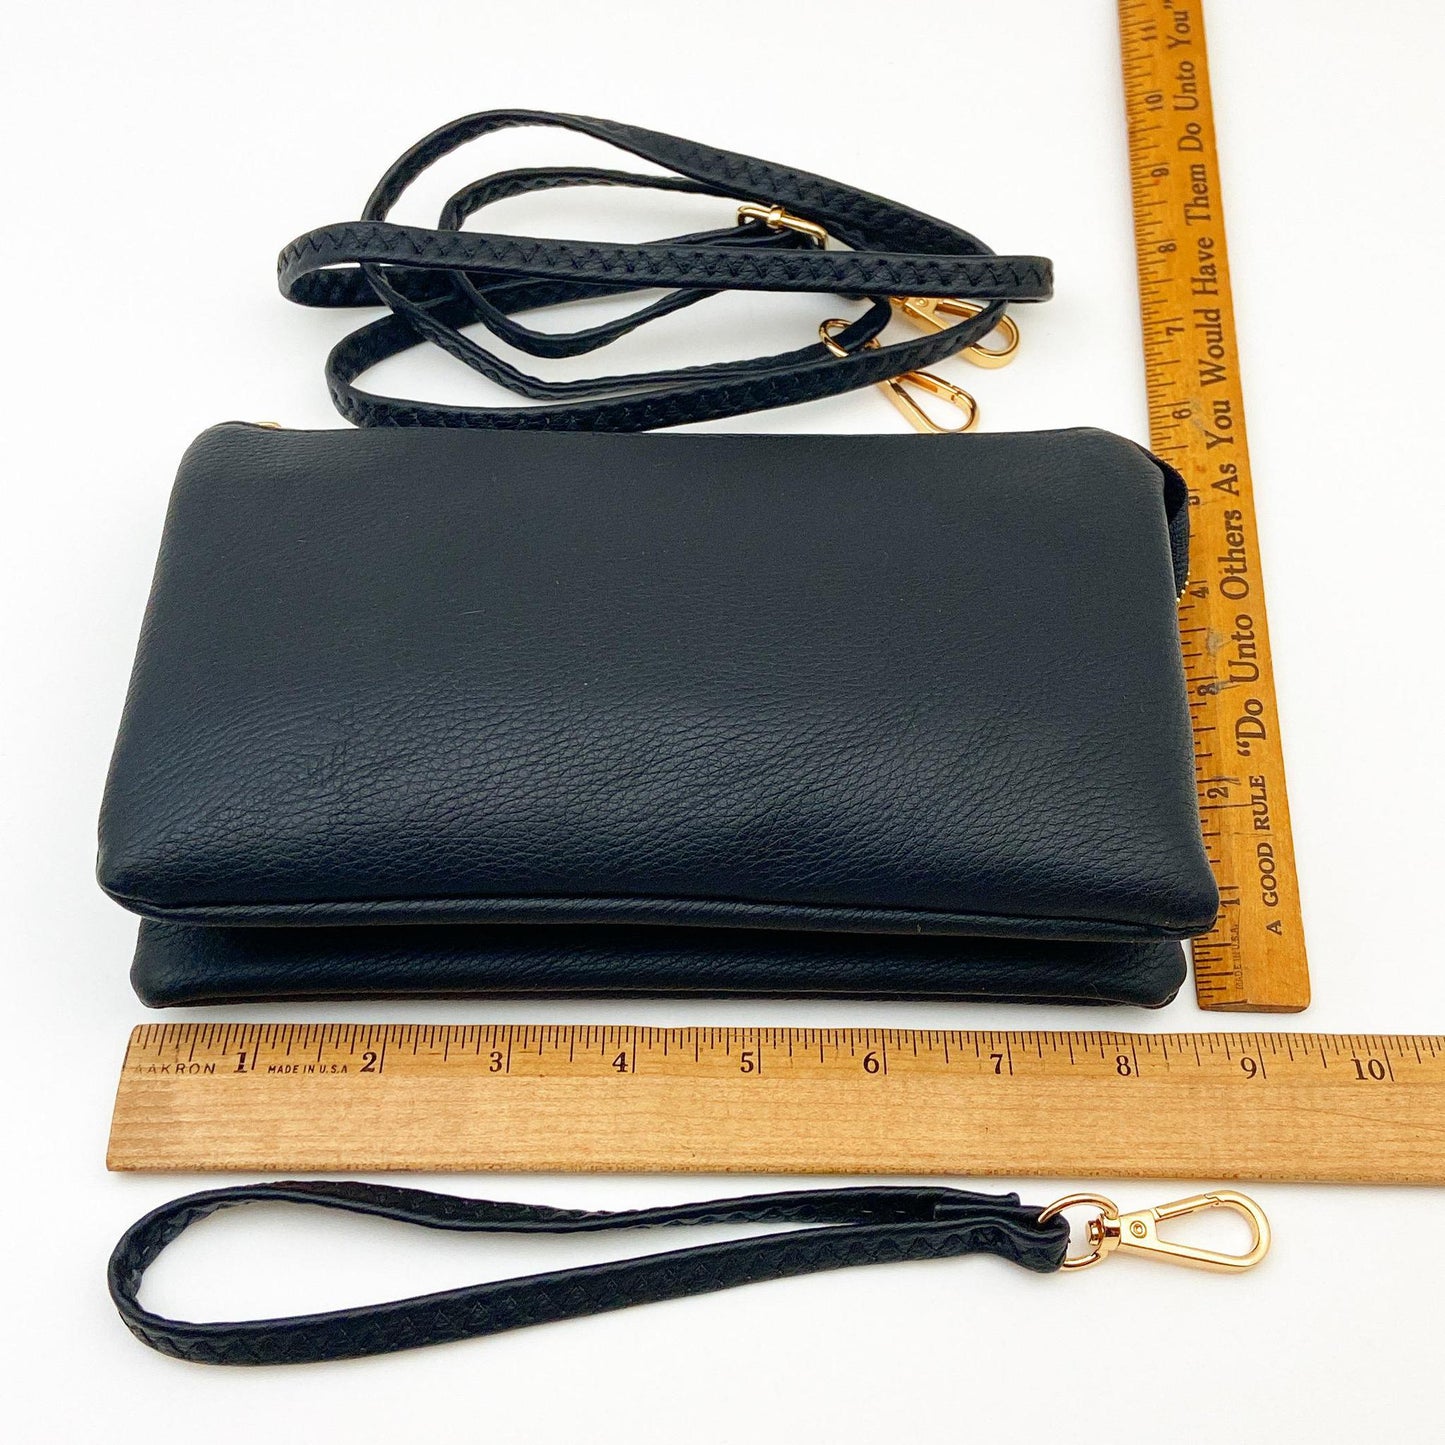 4 in 1 Handbag - Crossbody/Clutch/Wristlet - Violet